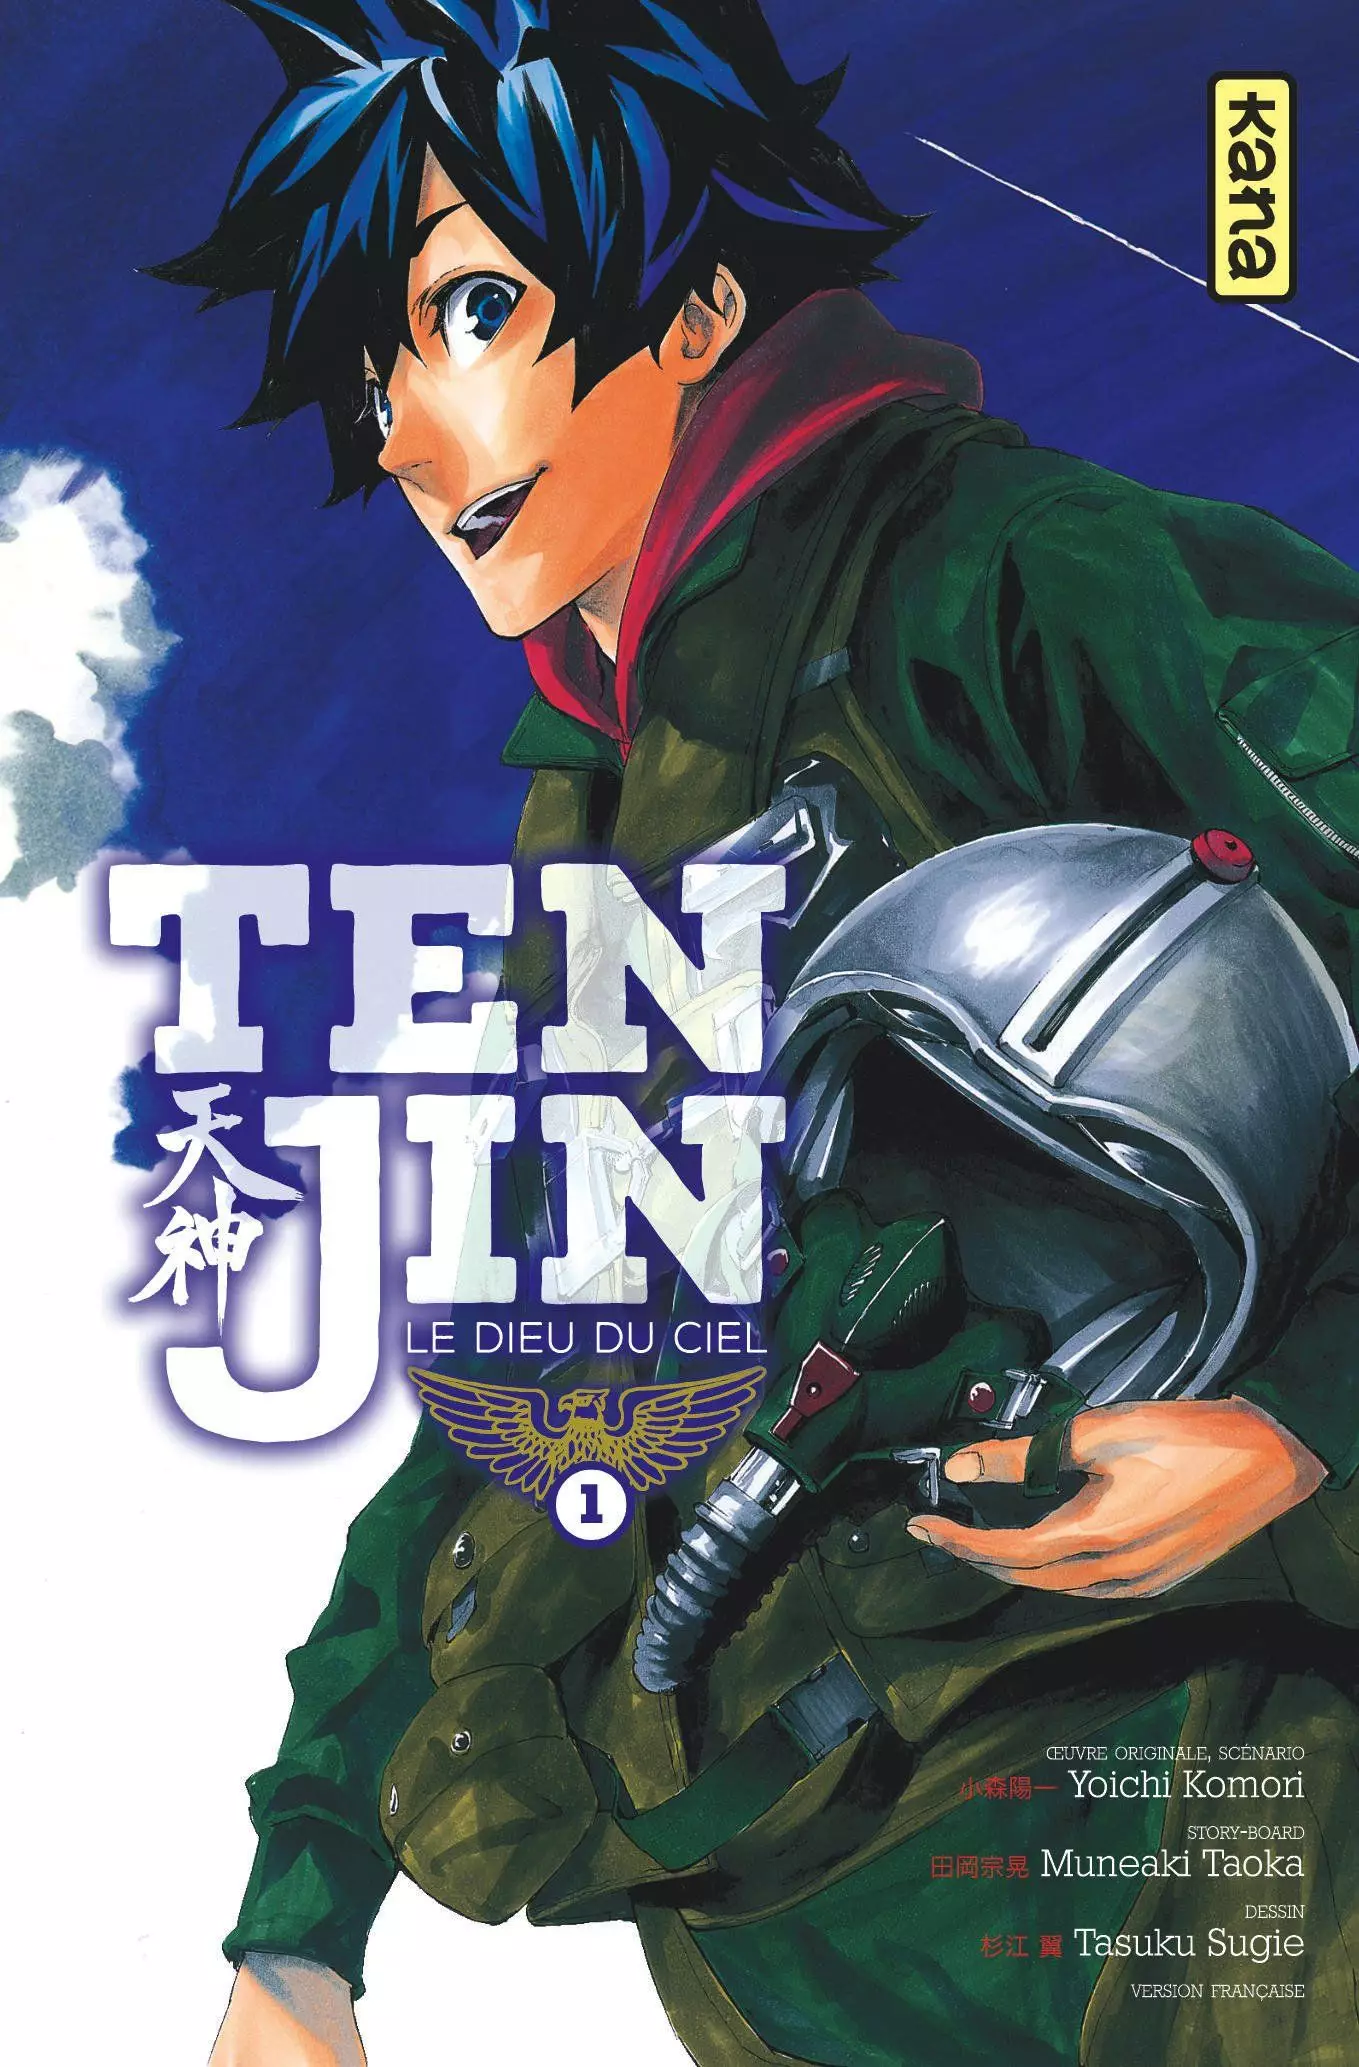 Tenjin - Le Dieu du Ciel Tenji-1-kana